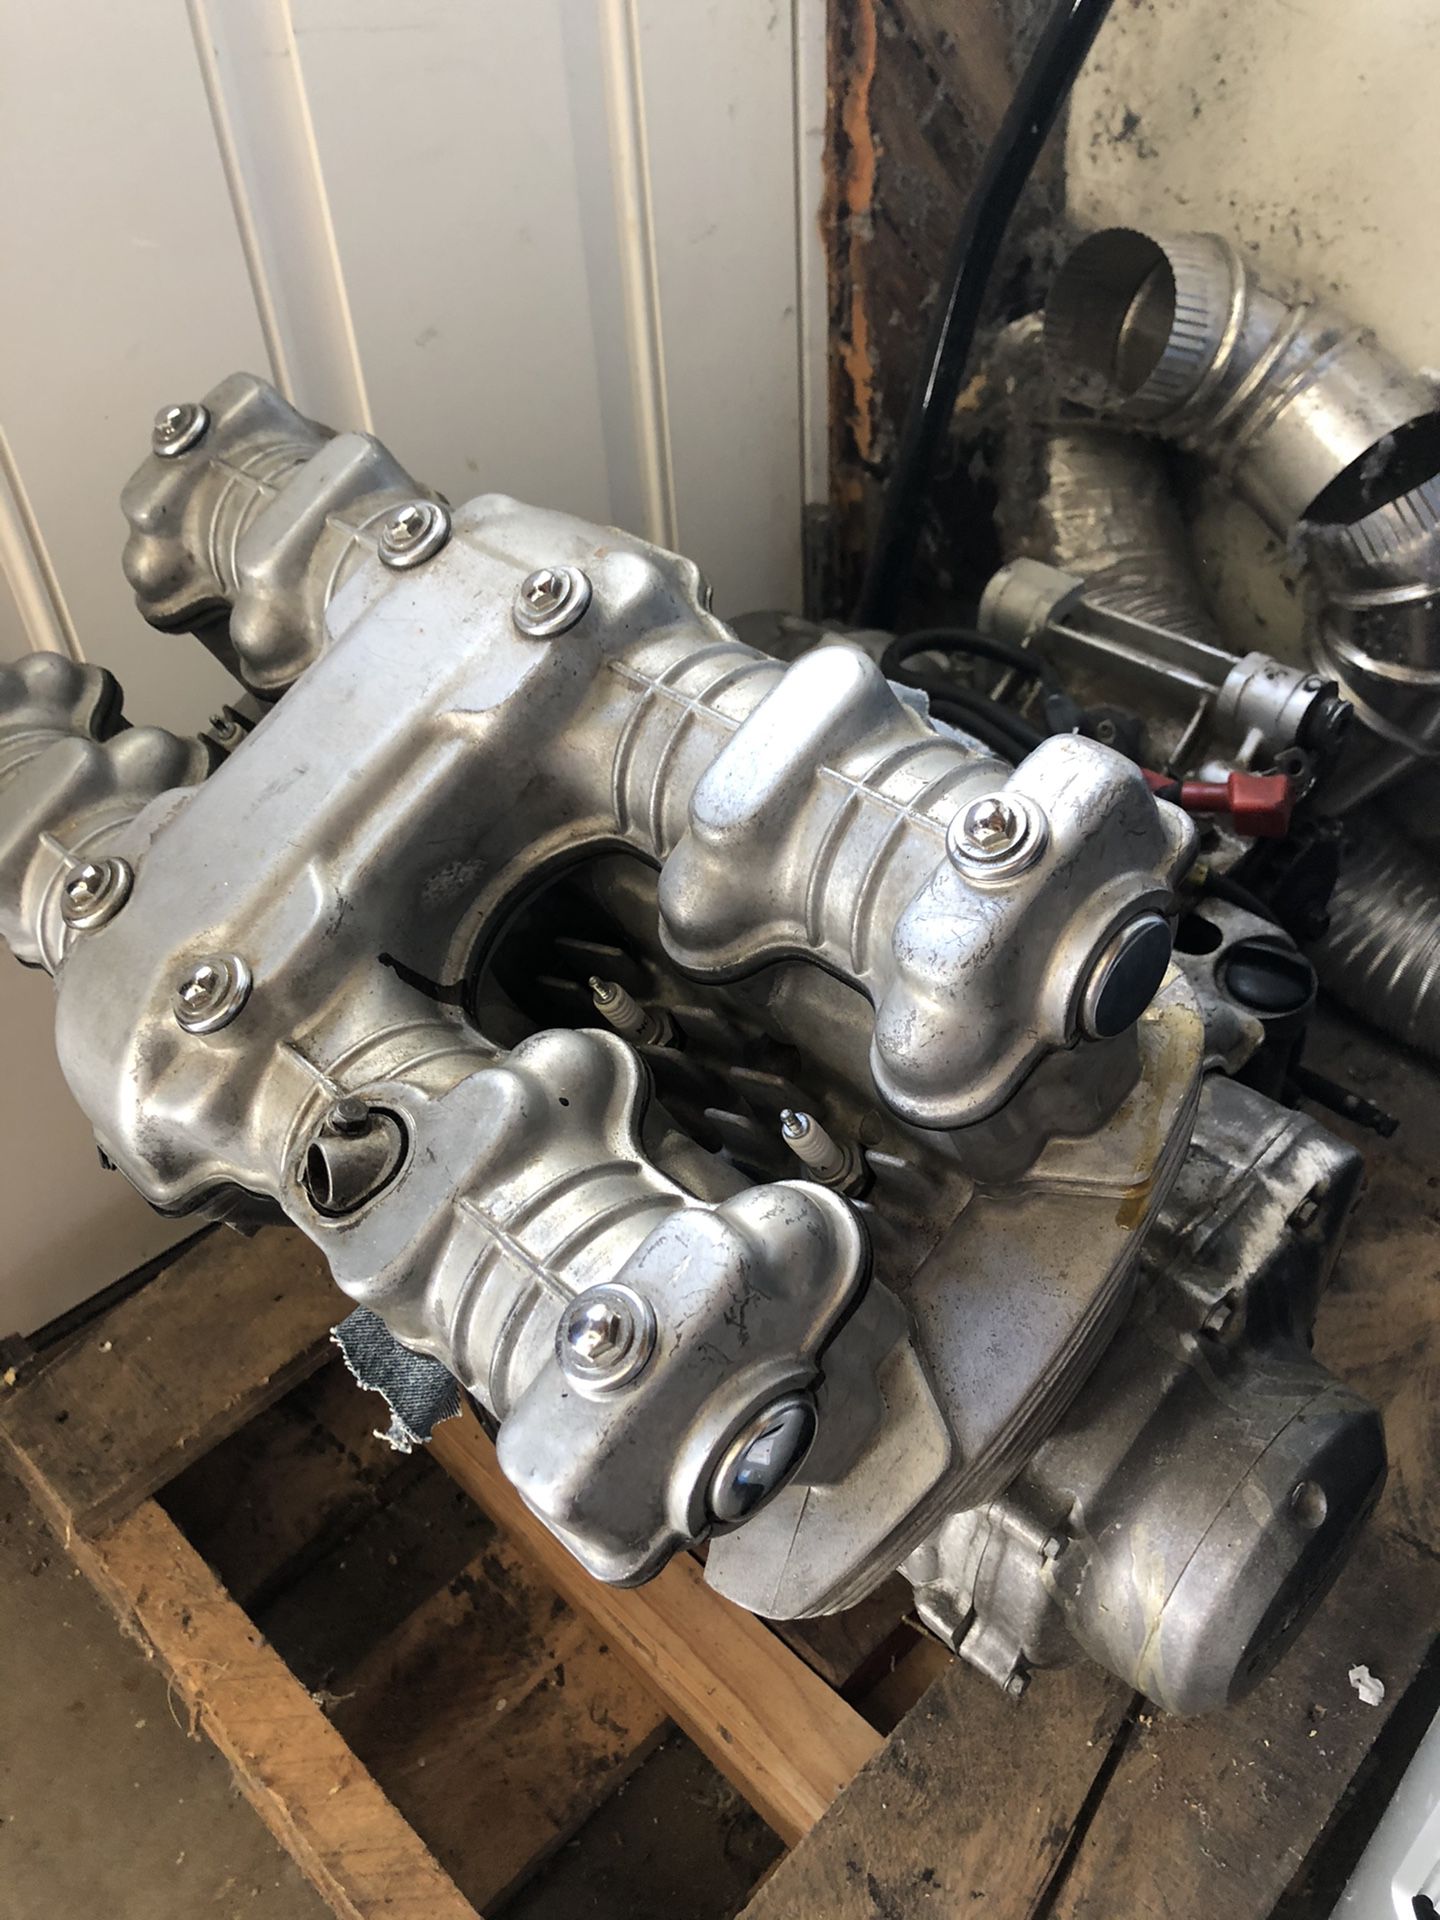 Honda CB750 DOHC Engine With Carbs Carbs Need Rebuild